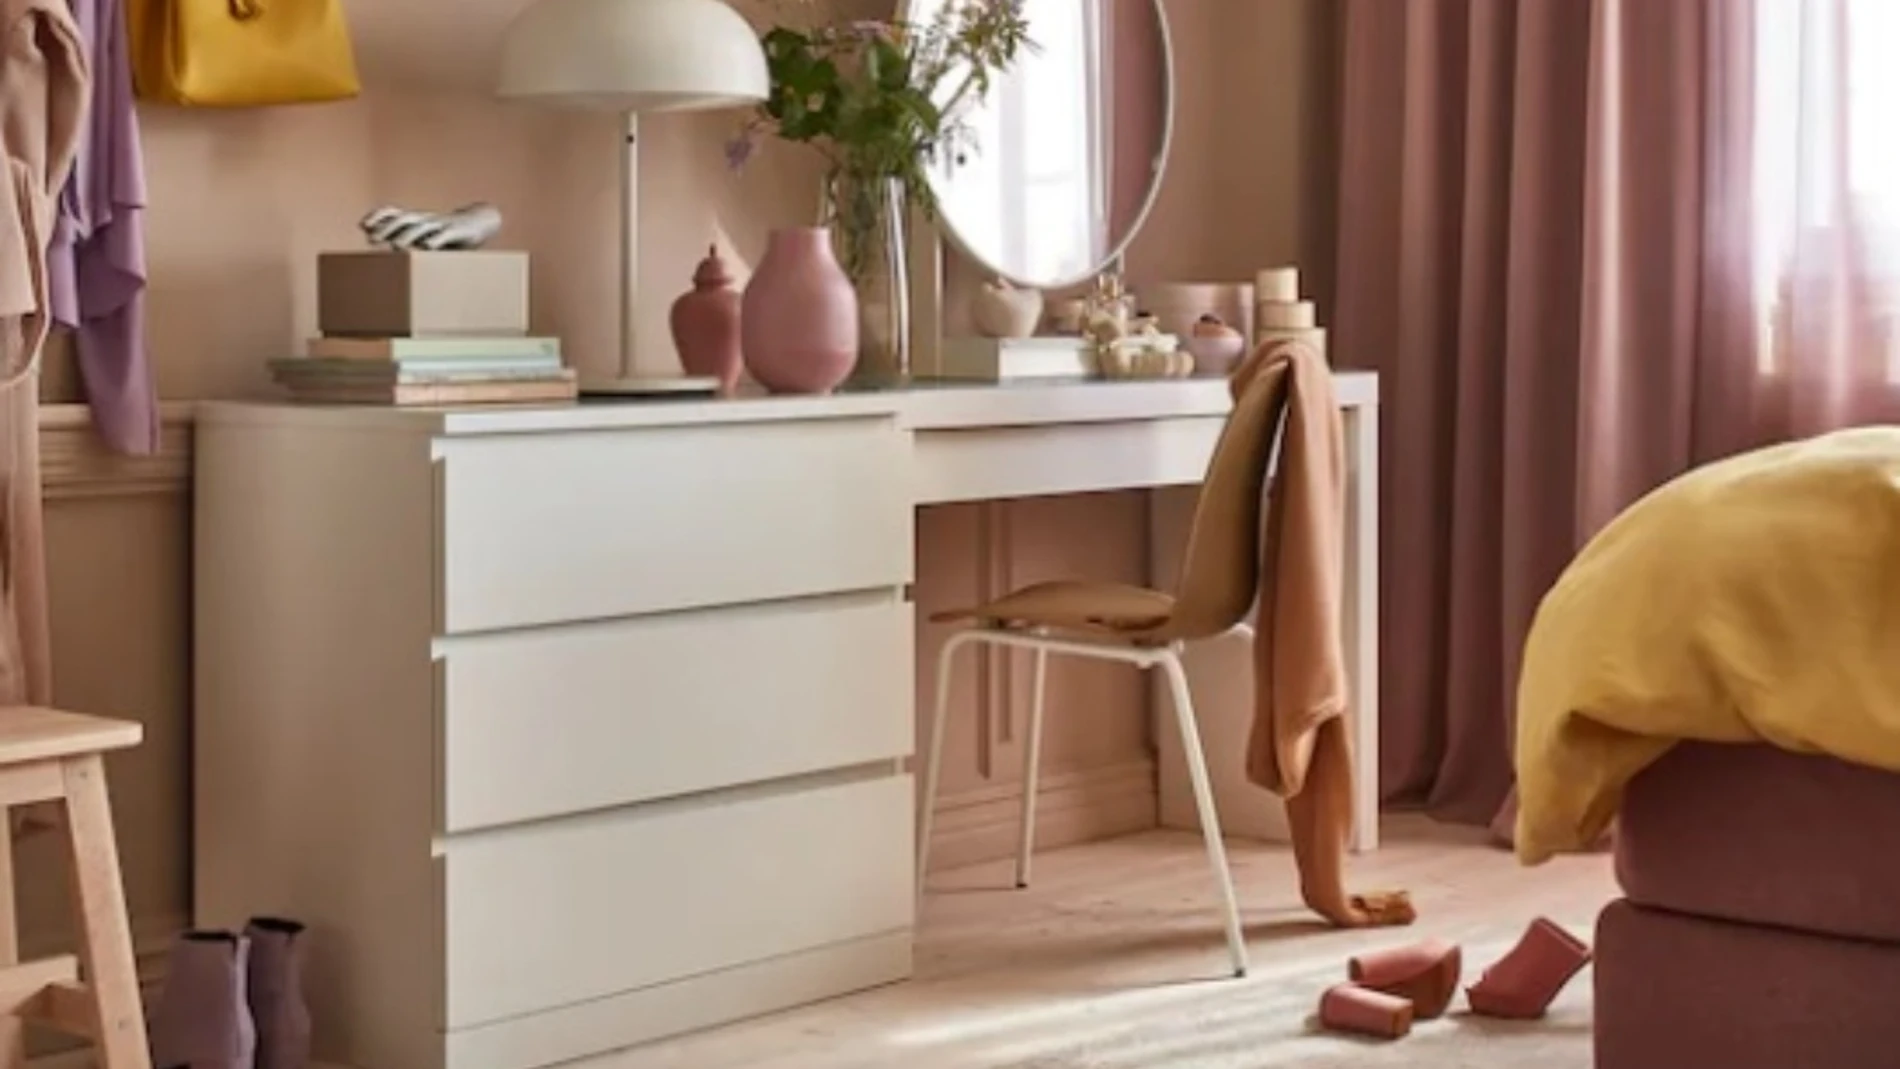 Imagen del mueble modelo 'Malm', comercializado por Ikea.